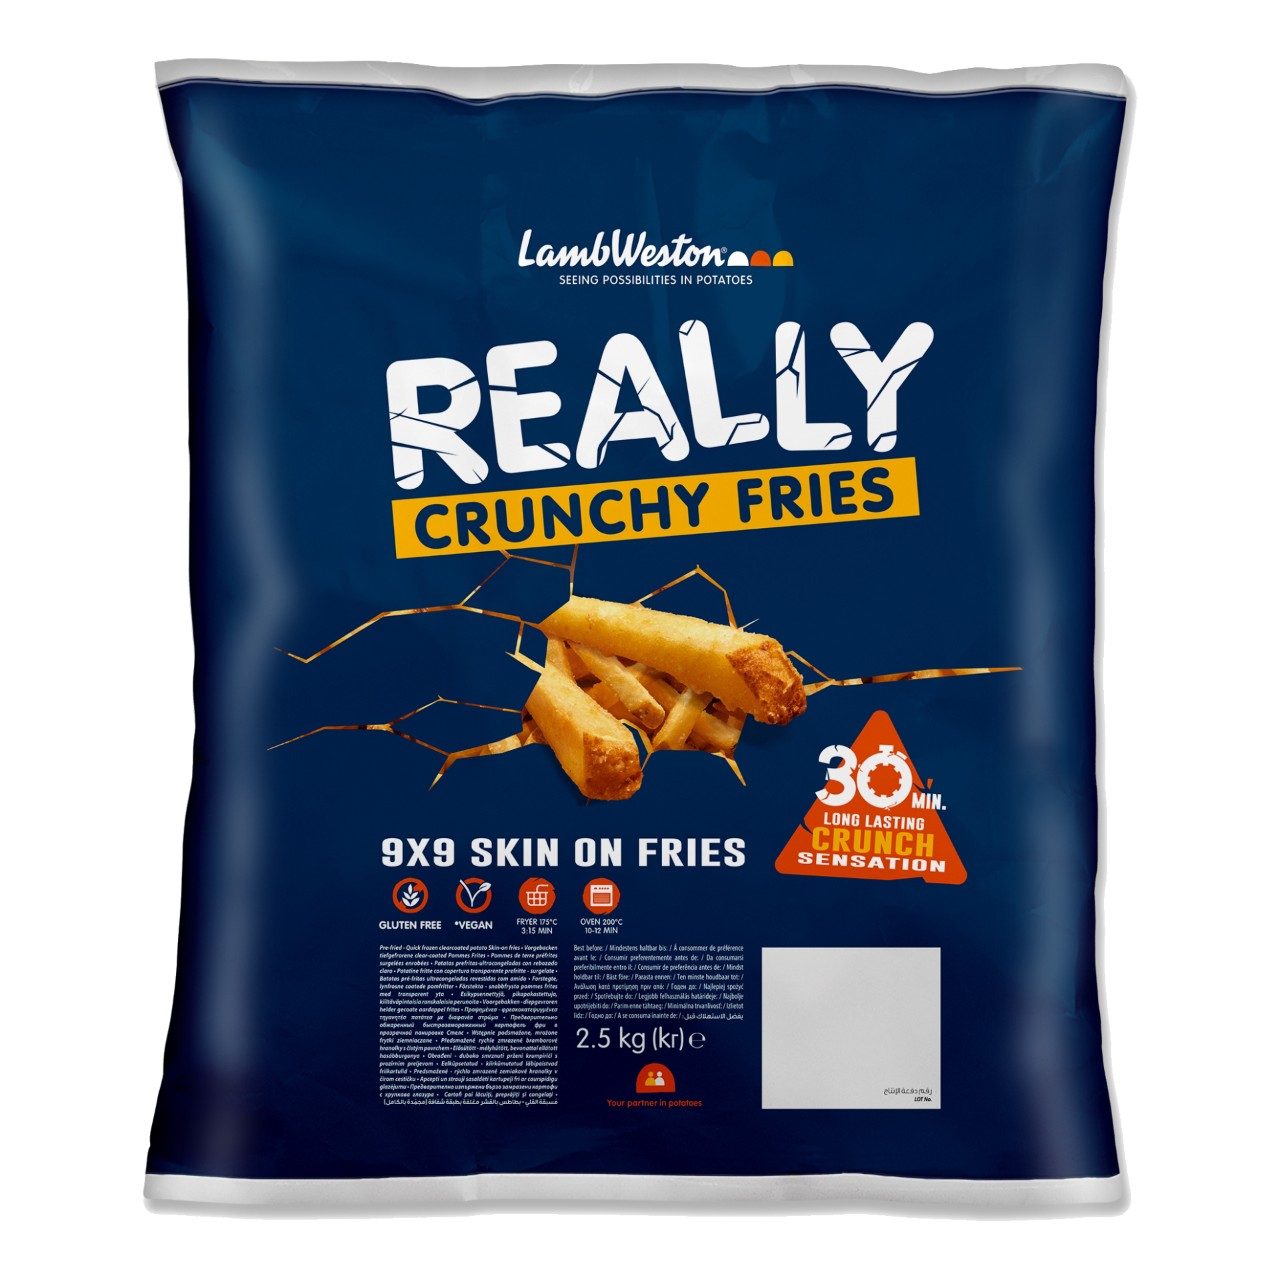 Really Crunchy fries 9x9 skin on